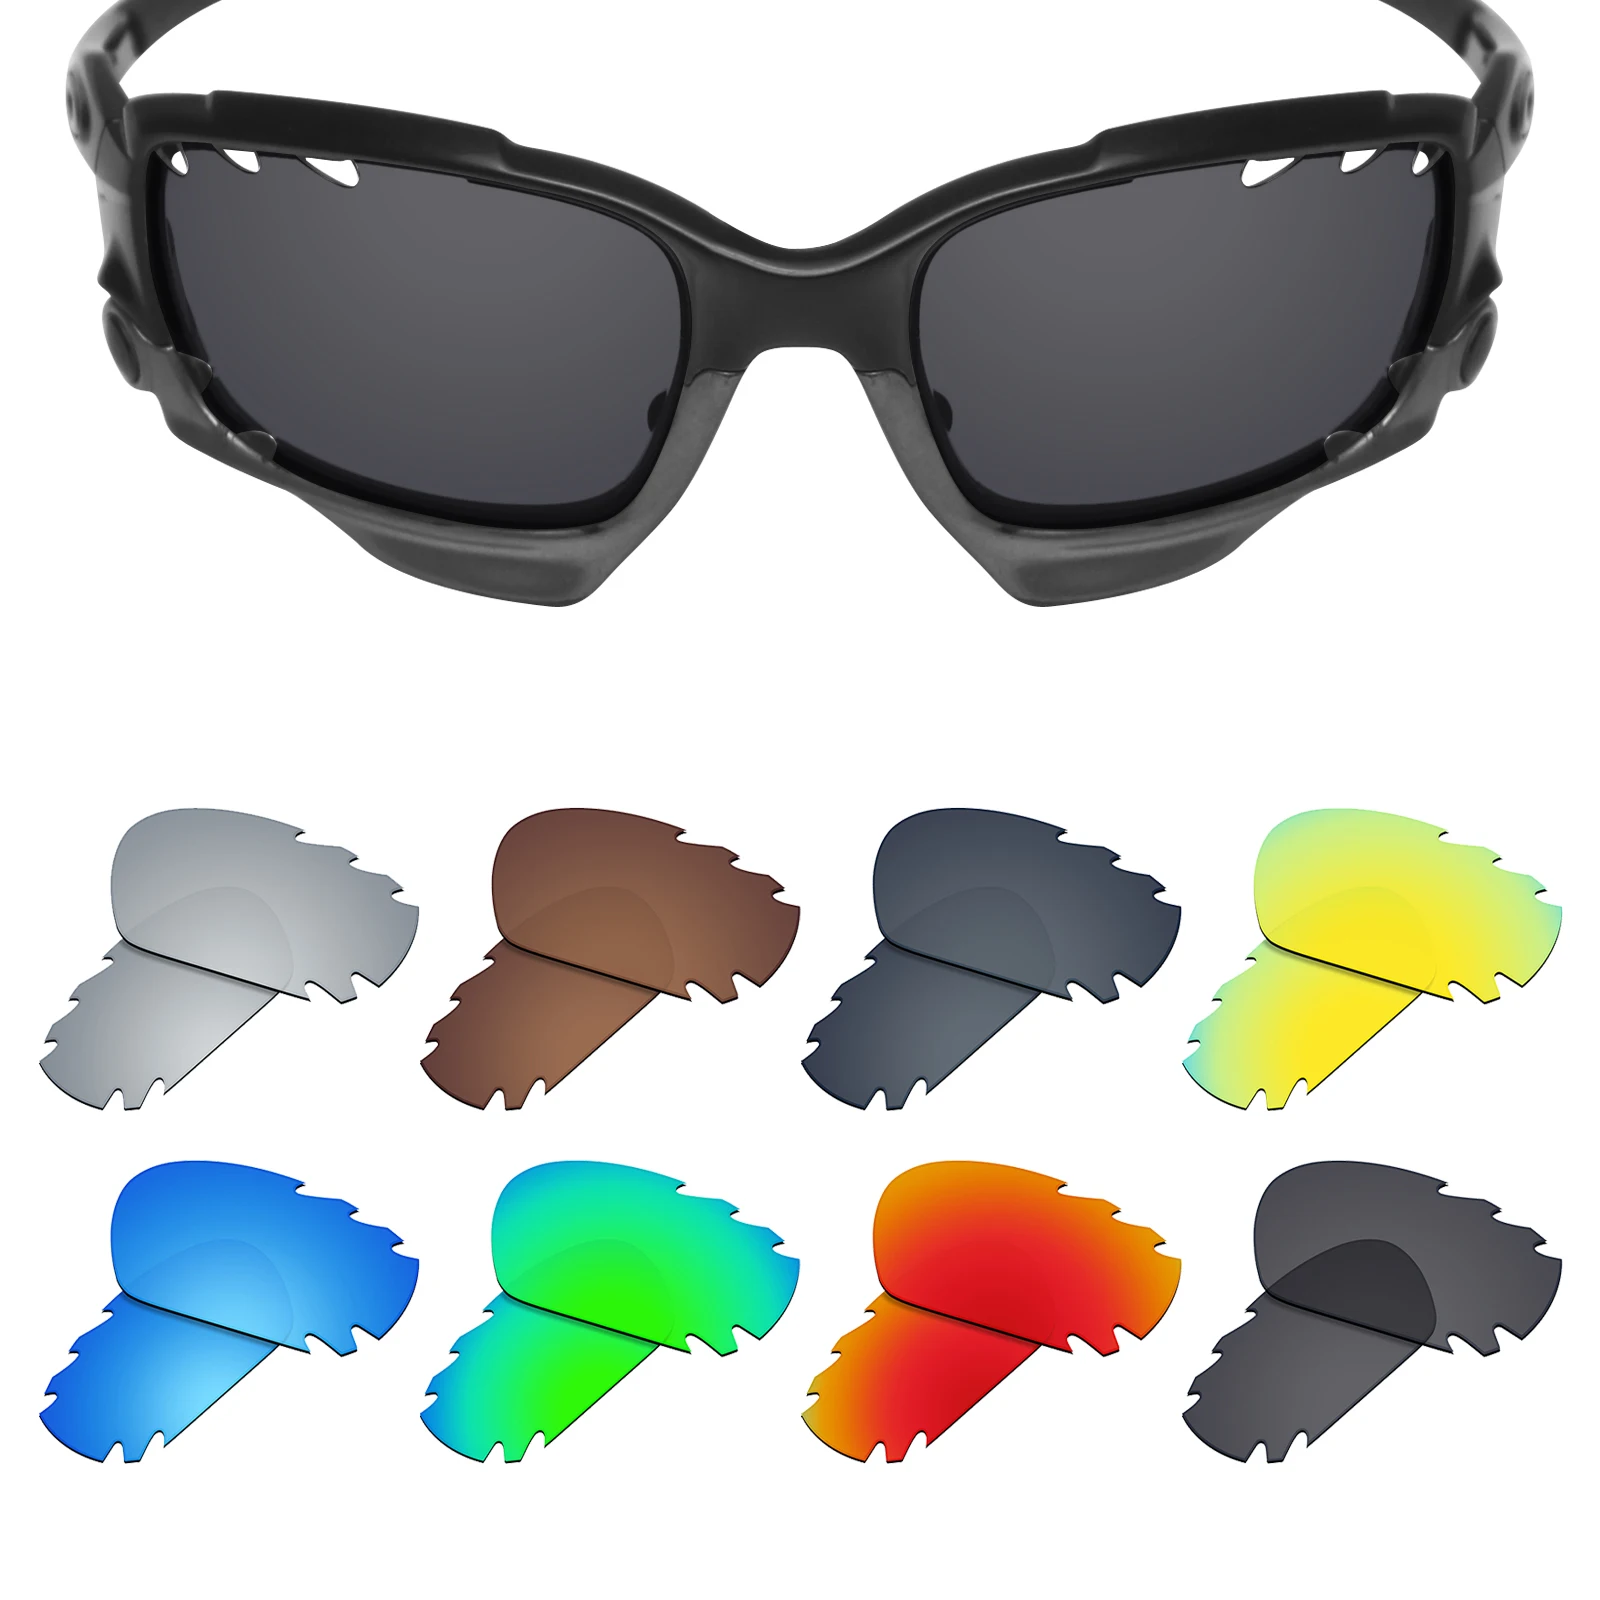 SmartVLT Performance Polarized Replacement Lenses for Oakley Jawbone Vented Sunglasses - Multiple Options